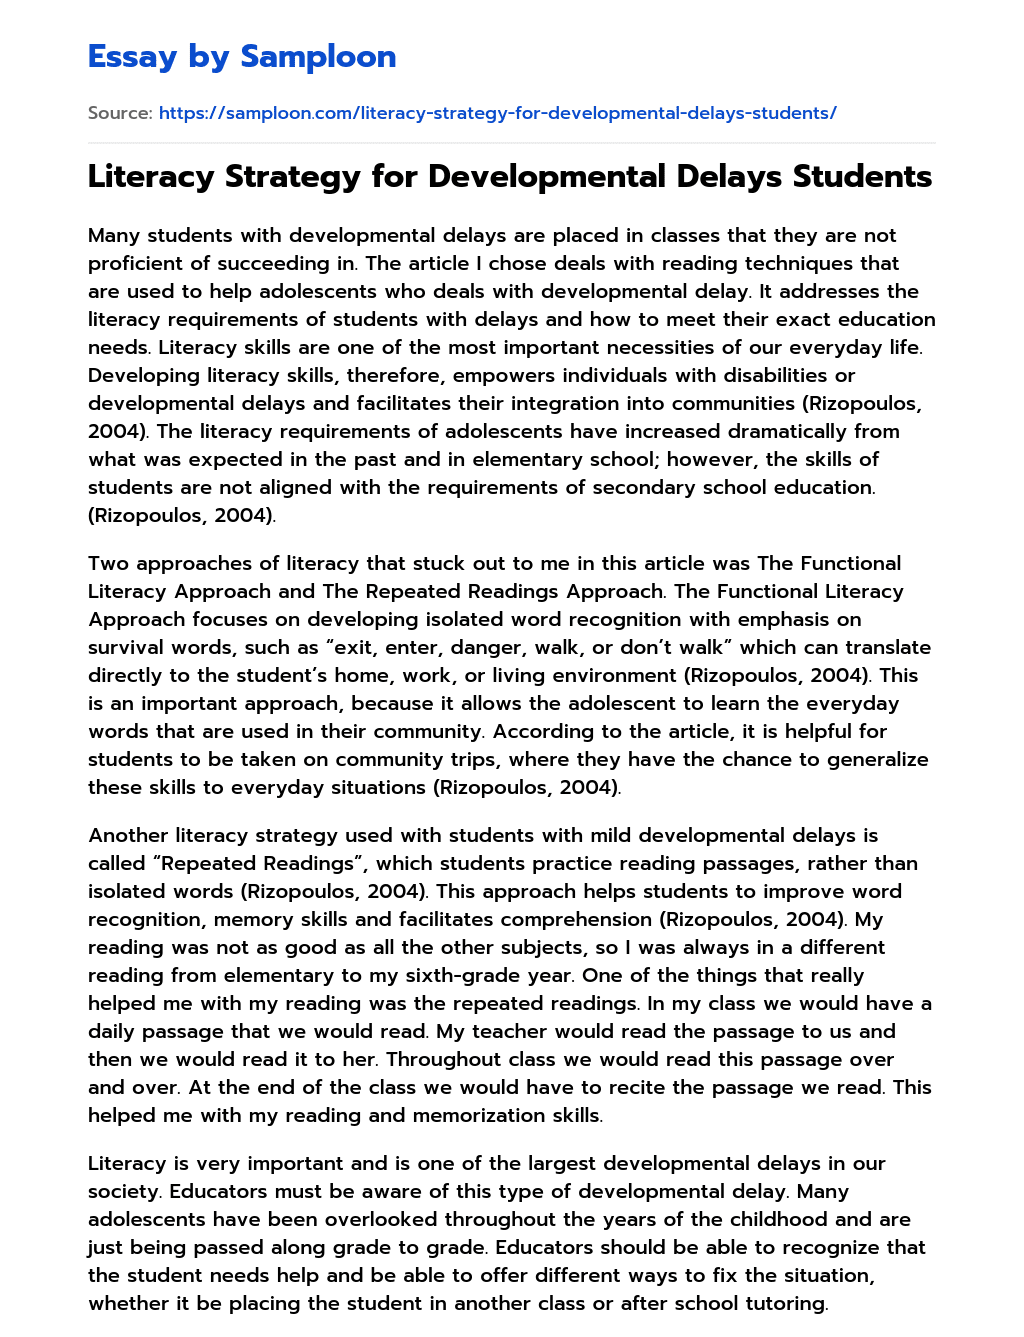 Literacy Strategy for Developmental Delays Students essay